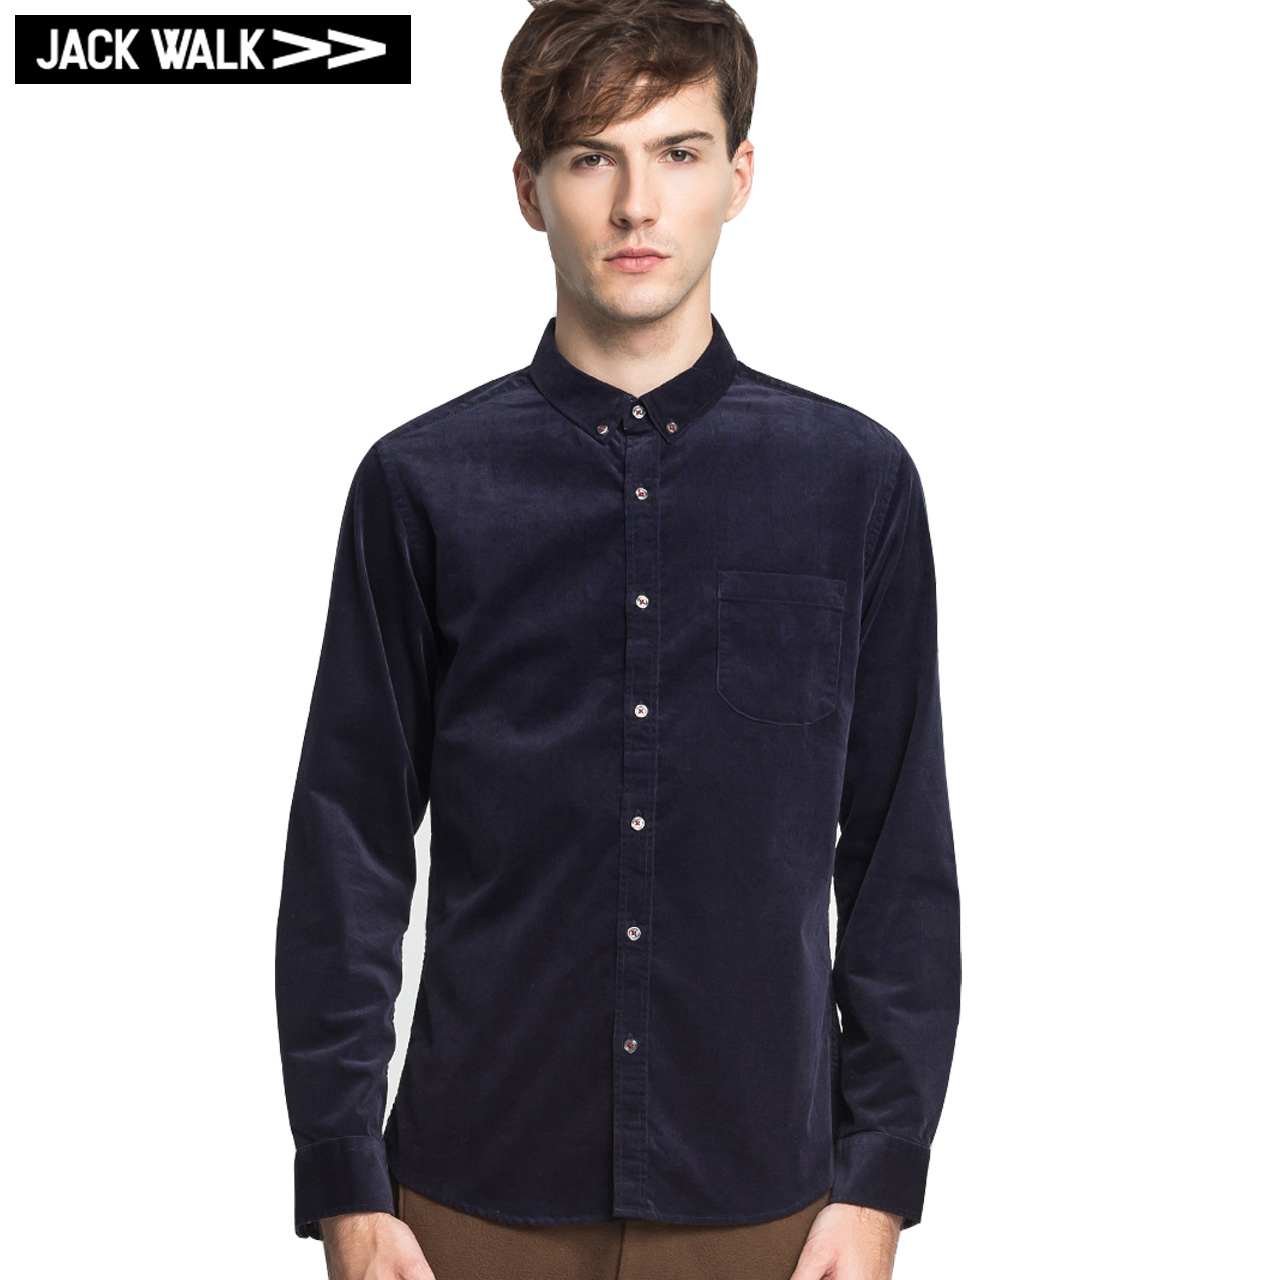 JACK WALK杰克沃克 男装细条灯芯绒领尖扣修身版衬衫 K0143009